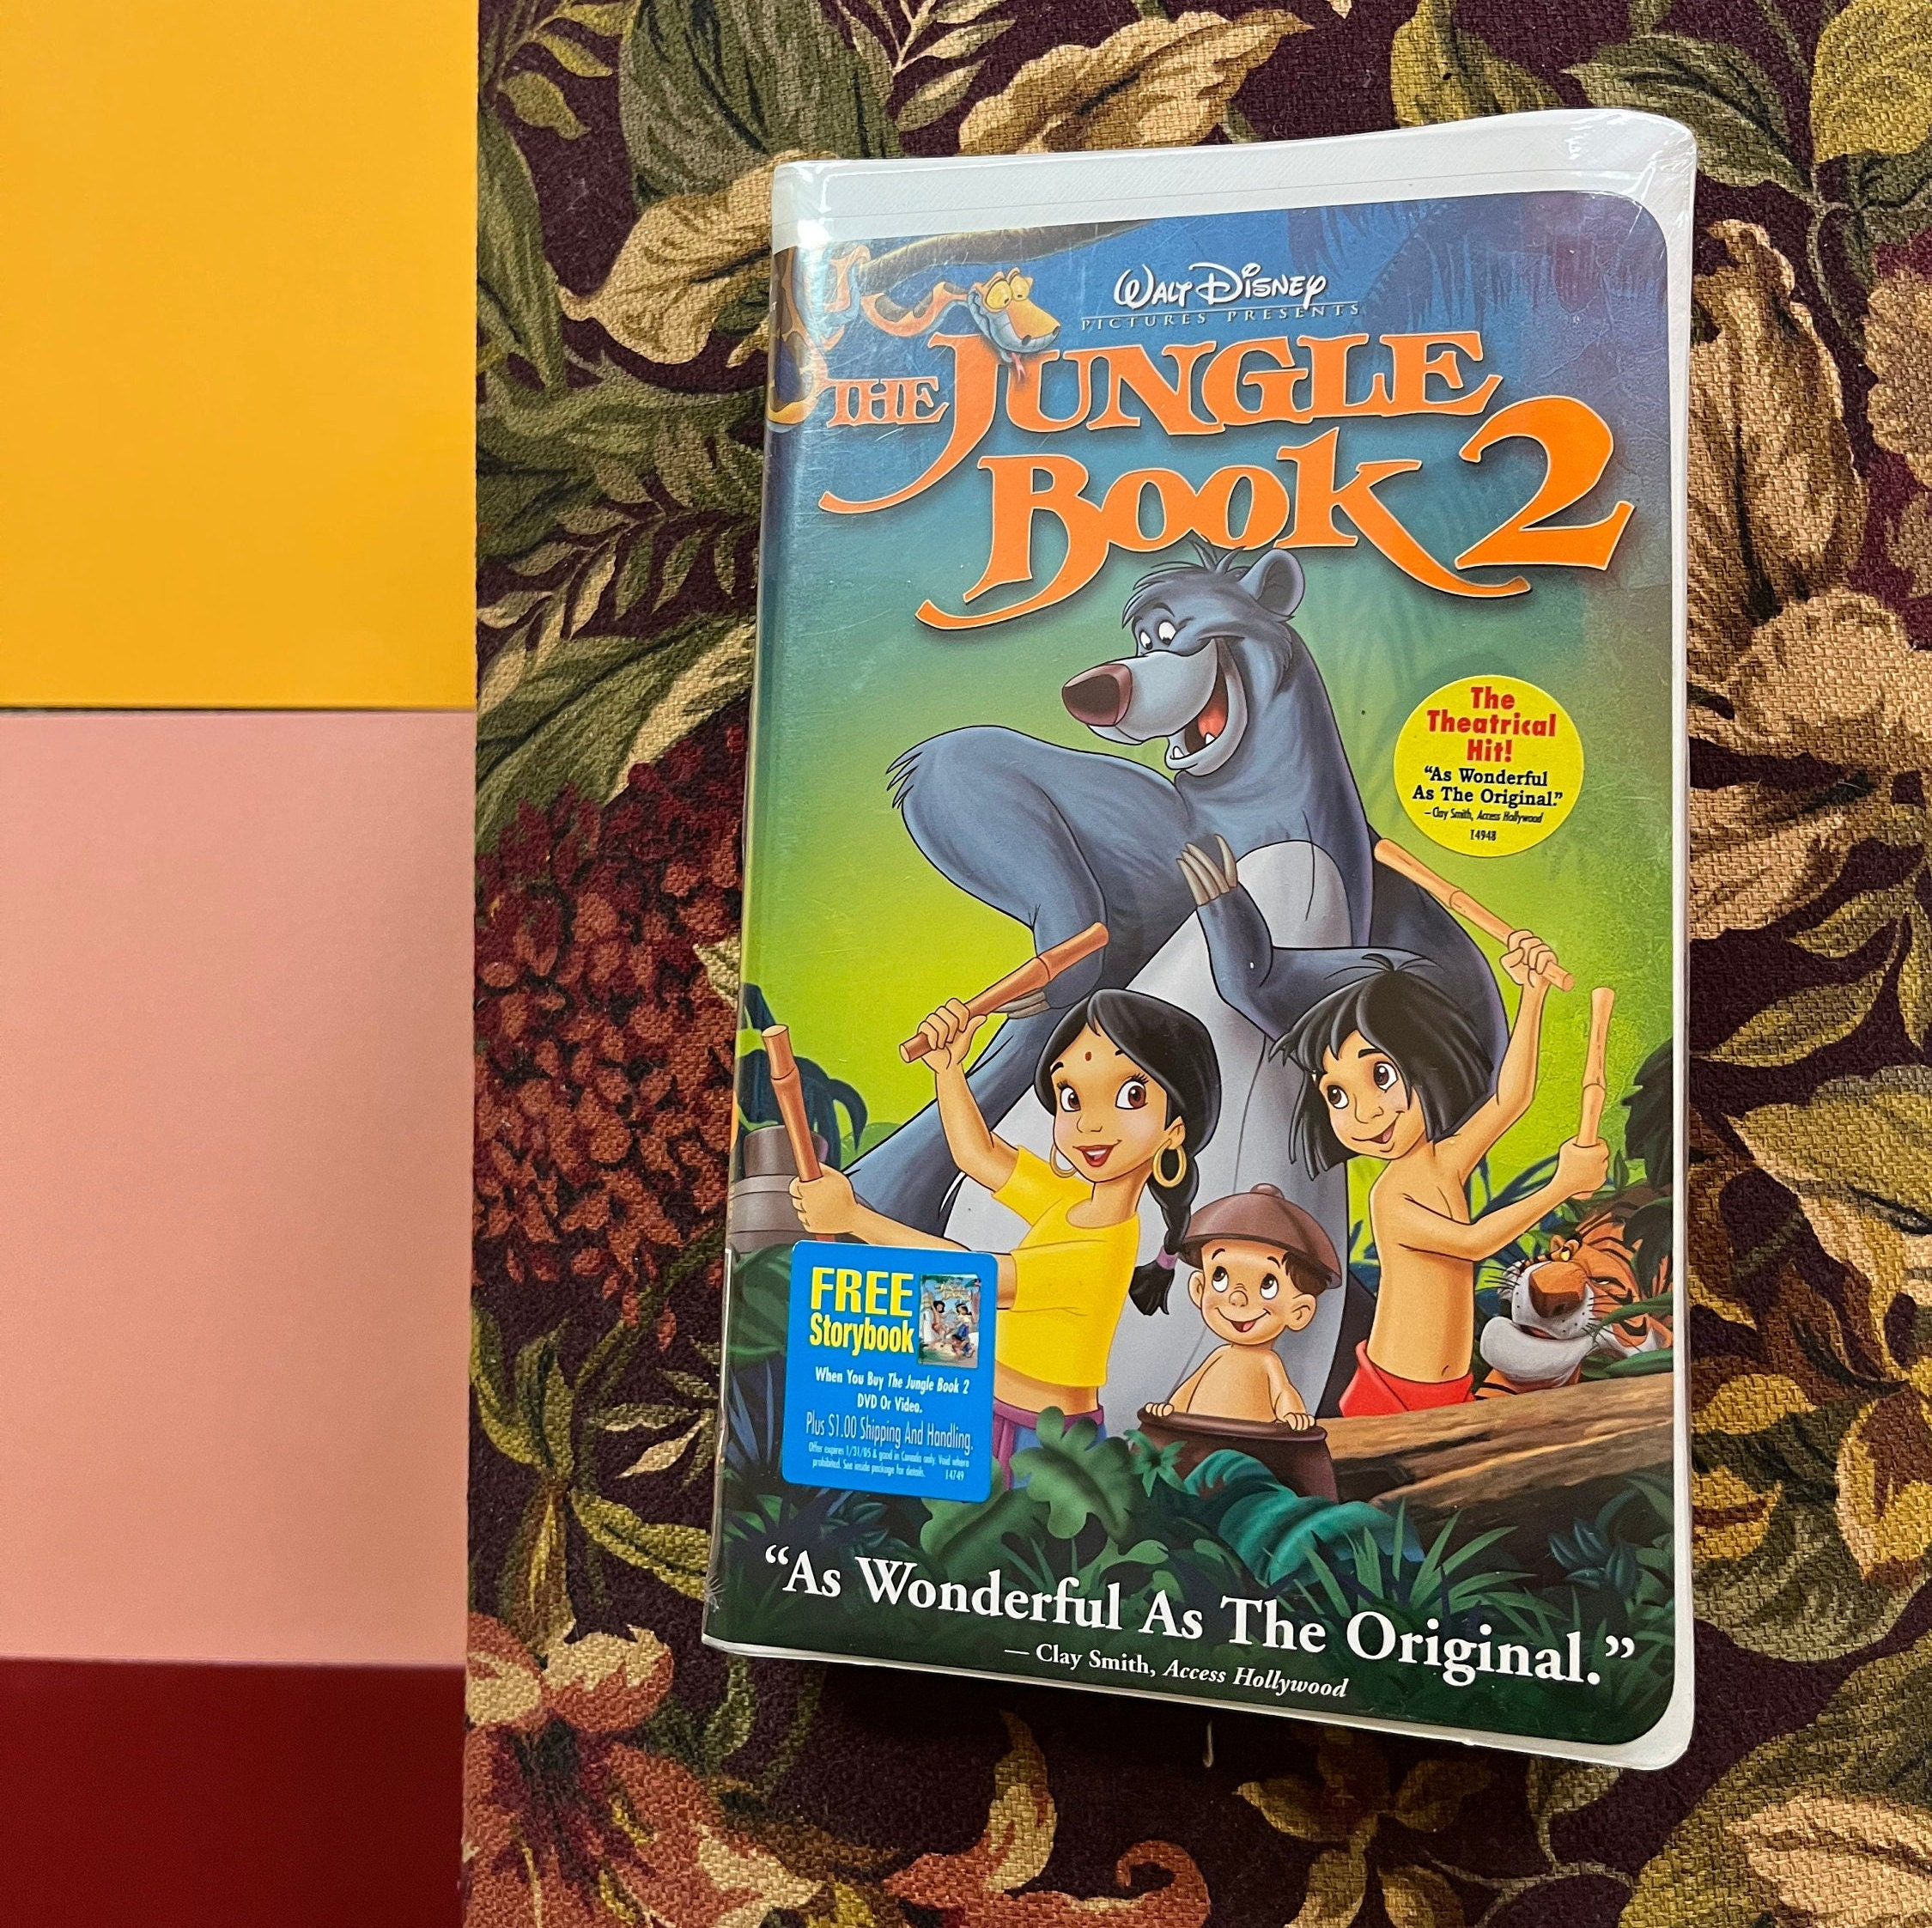 The Jungle Book 2 Dvd Cover